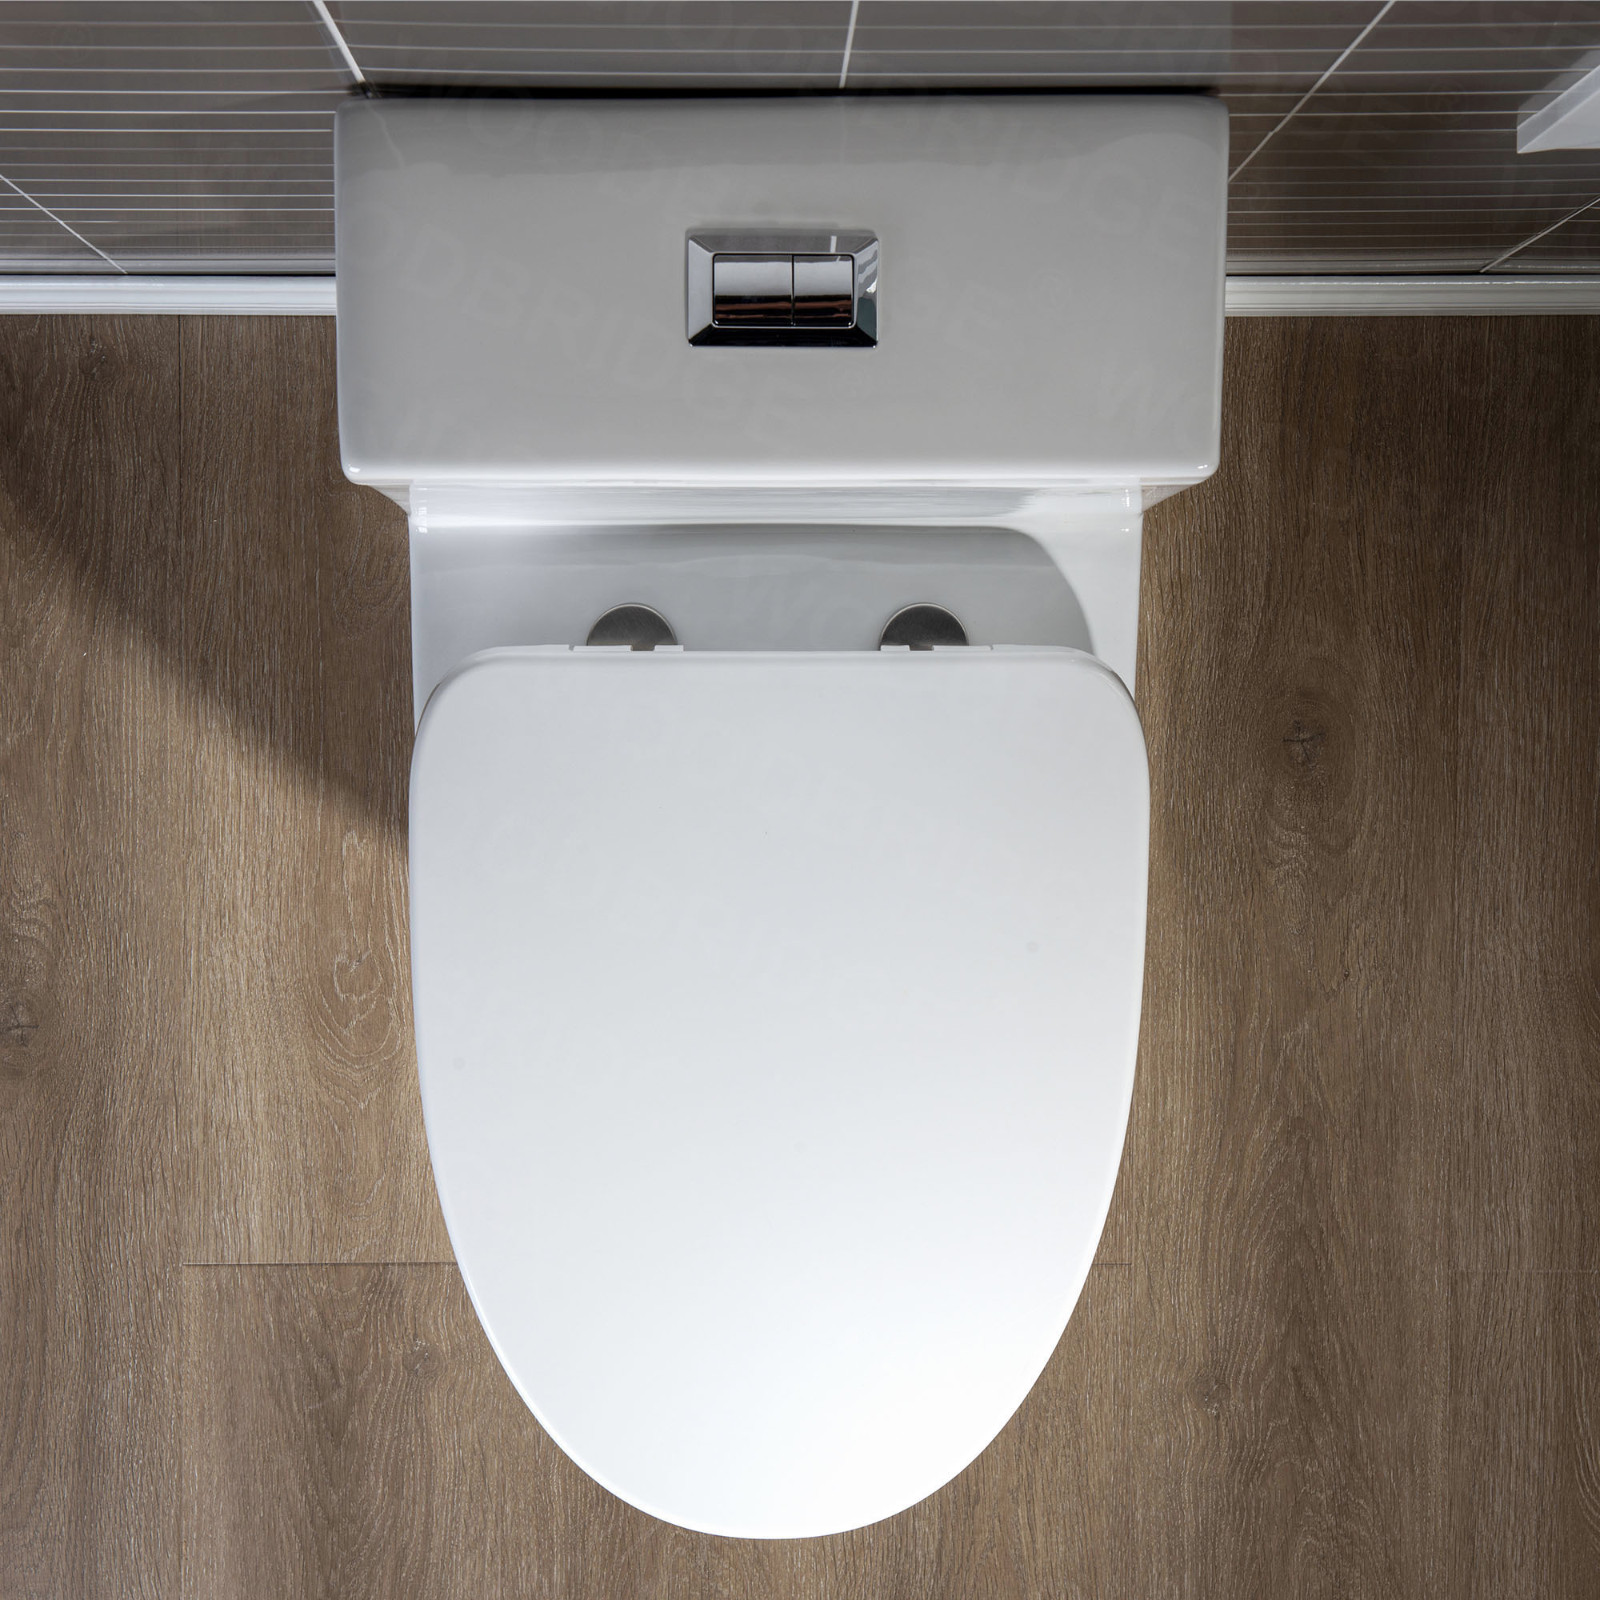 ᐅ【WOODBRIDGE Moder Design, Elongated One piece Toilet Dual flush 1.0/1.6  GPF,with Soft Closing Seat, white, T-0032-WOODBRIDGE】